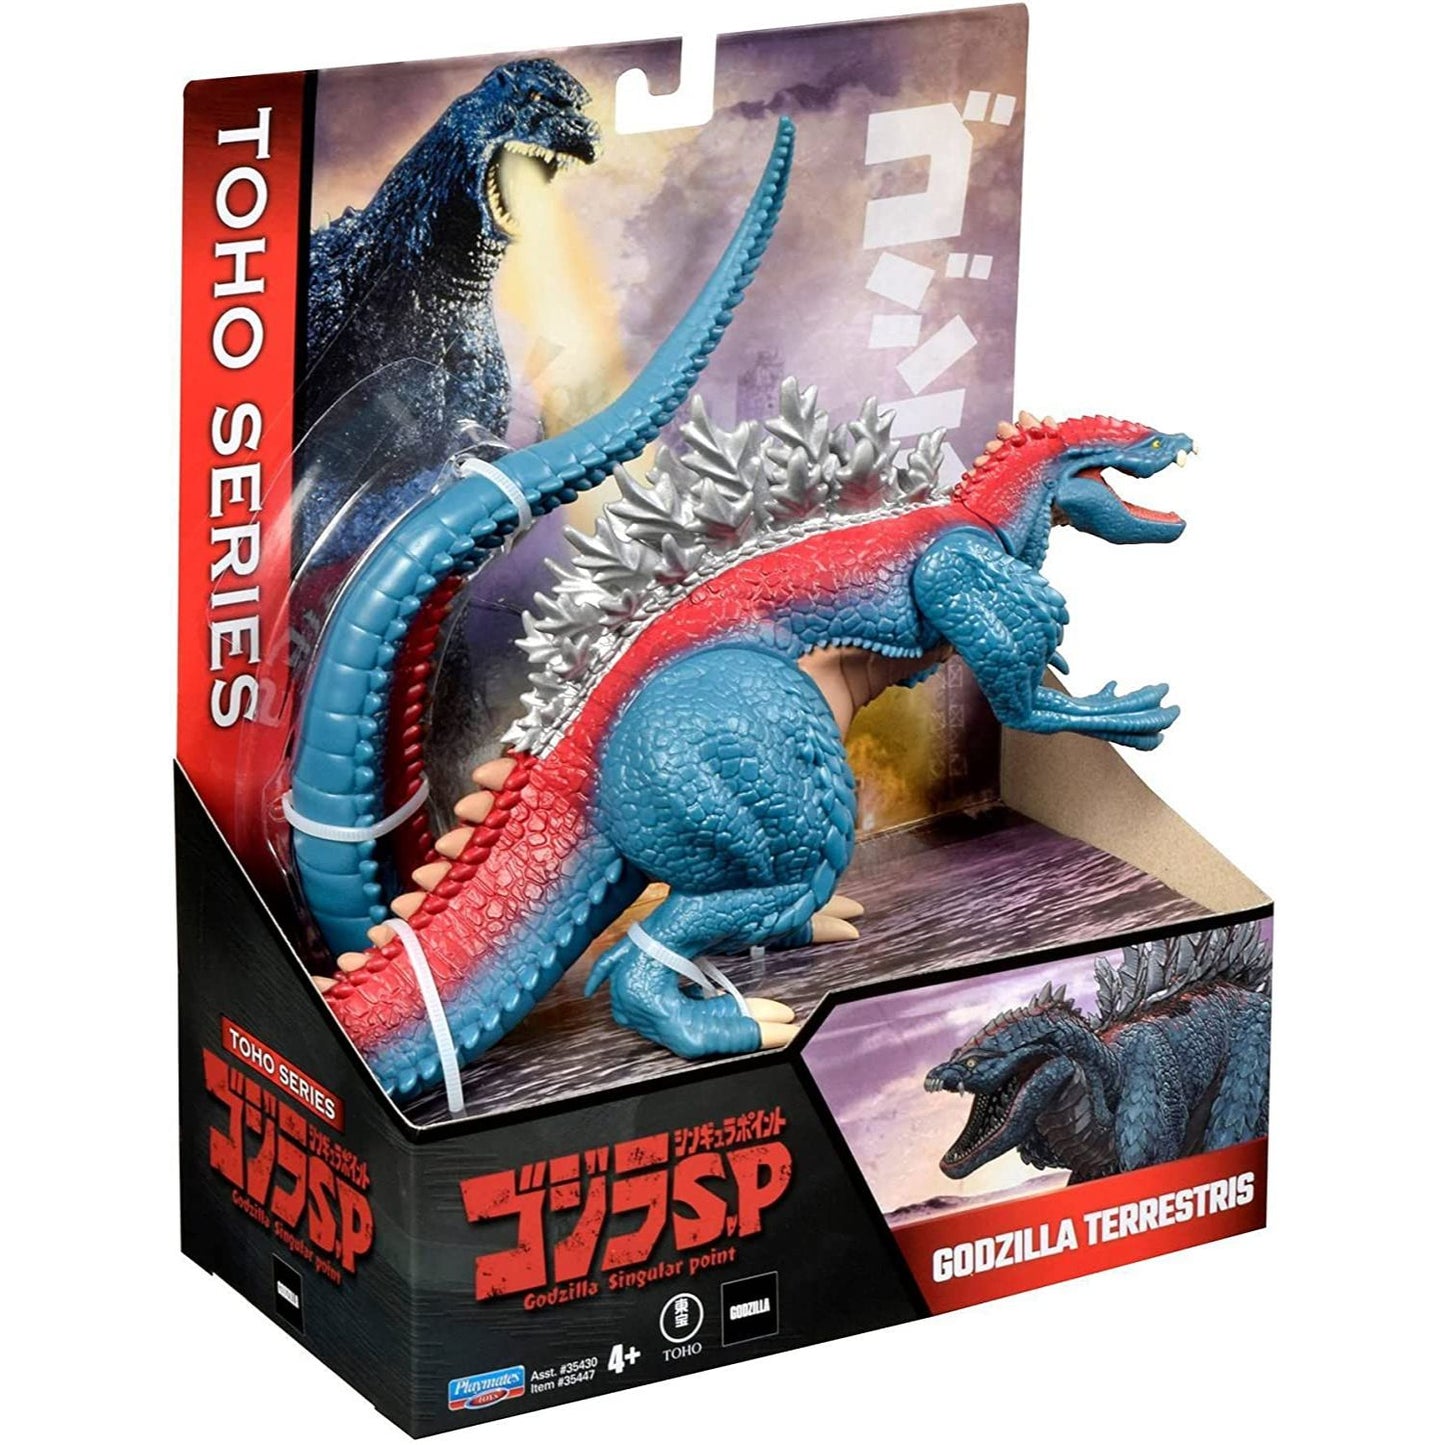 Godzilla Playmates Toys Toho Series 6.5-inch Action Figure Godzilla Terrestris